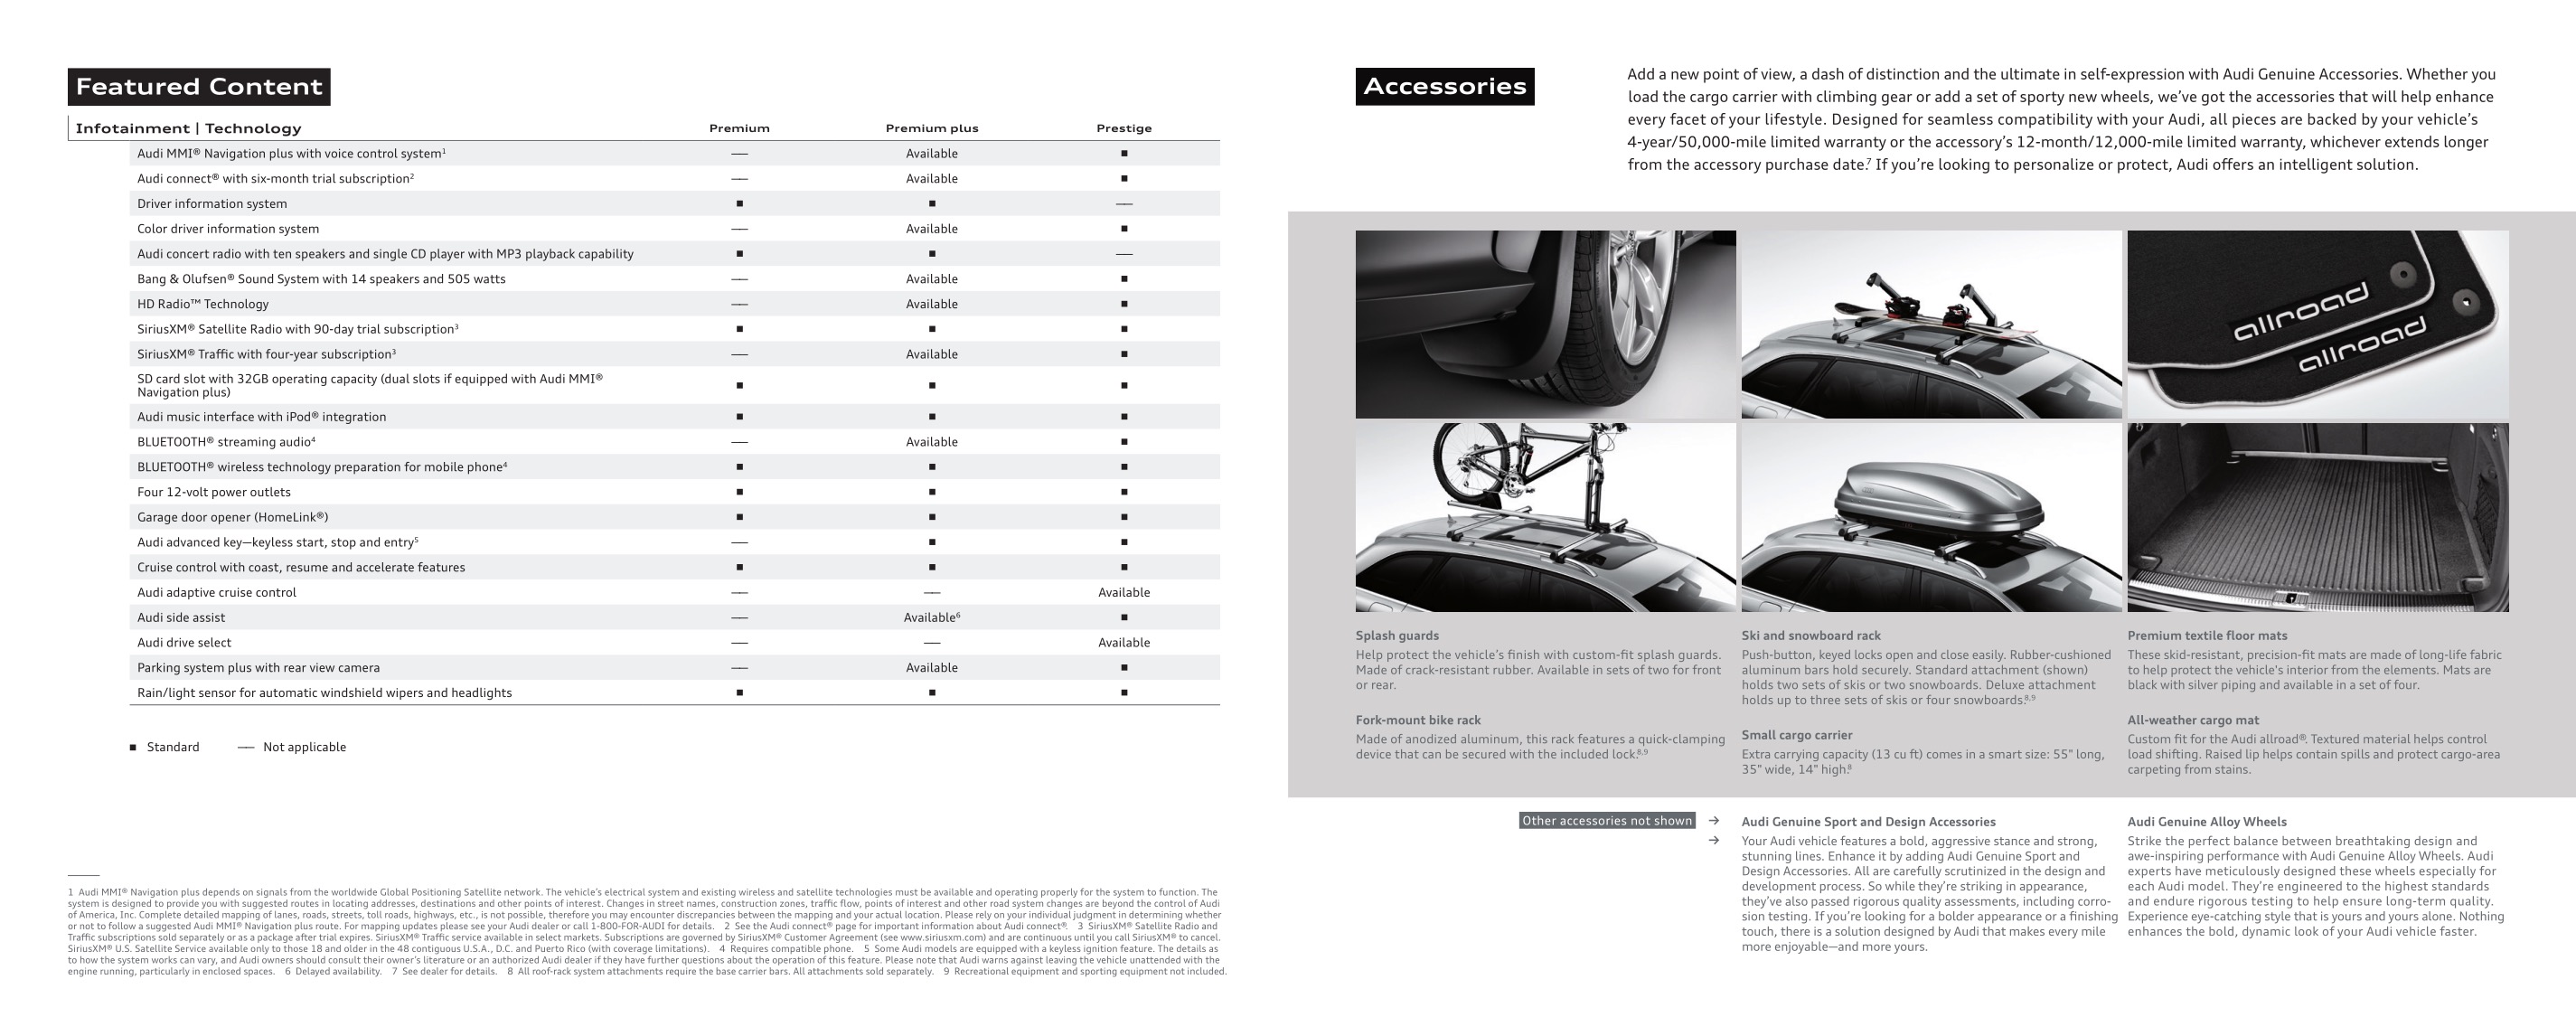 2014 Audi Allroad Brochure Page 2